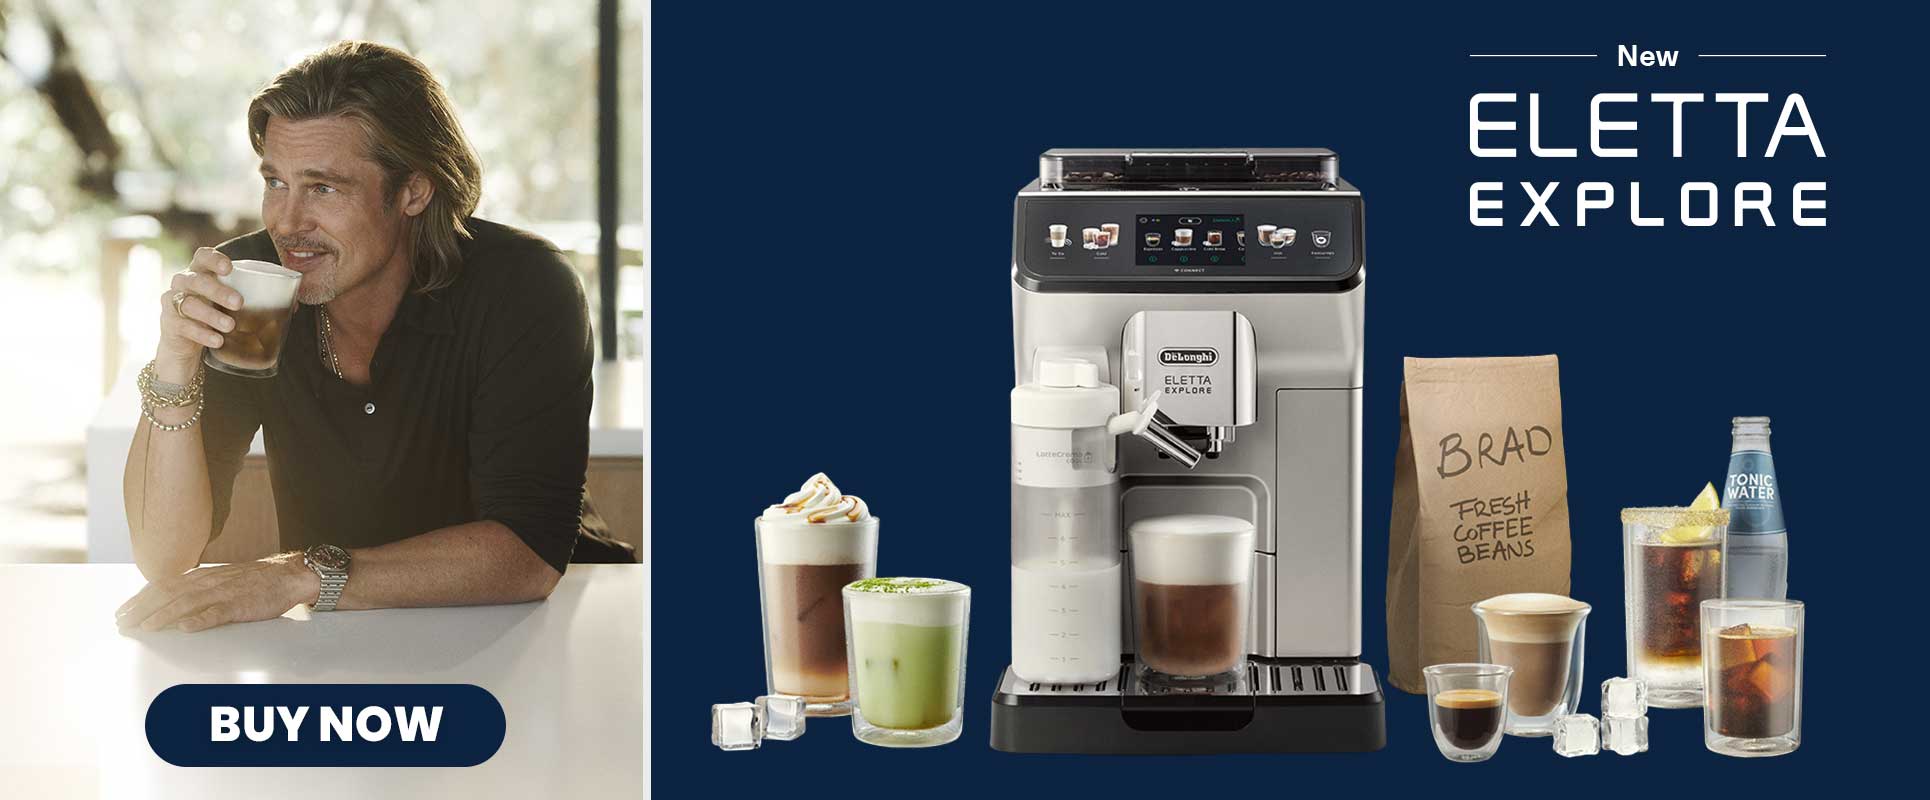 De'Longhi Magnifica ECAM290.22.B Evo Fully Automatic Bean-to-Cup Coffee  Machine, Black